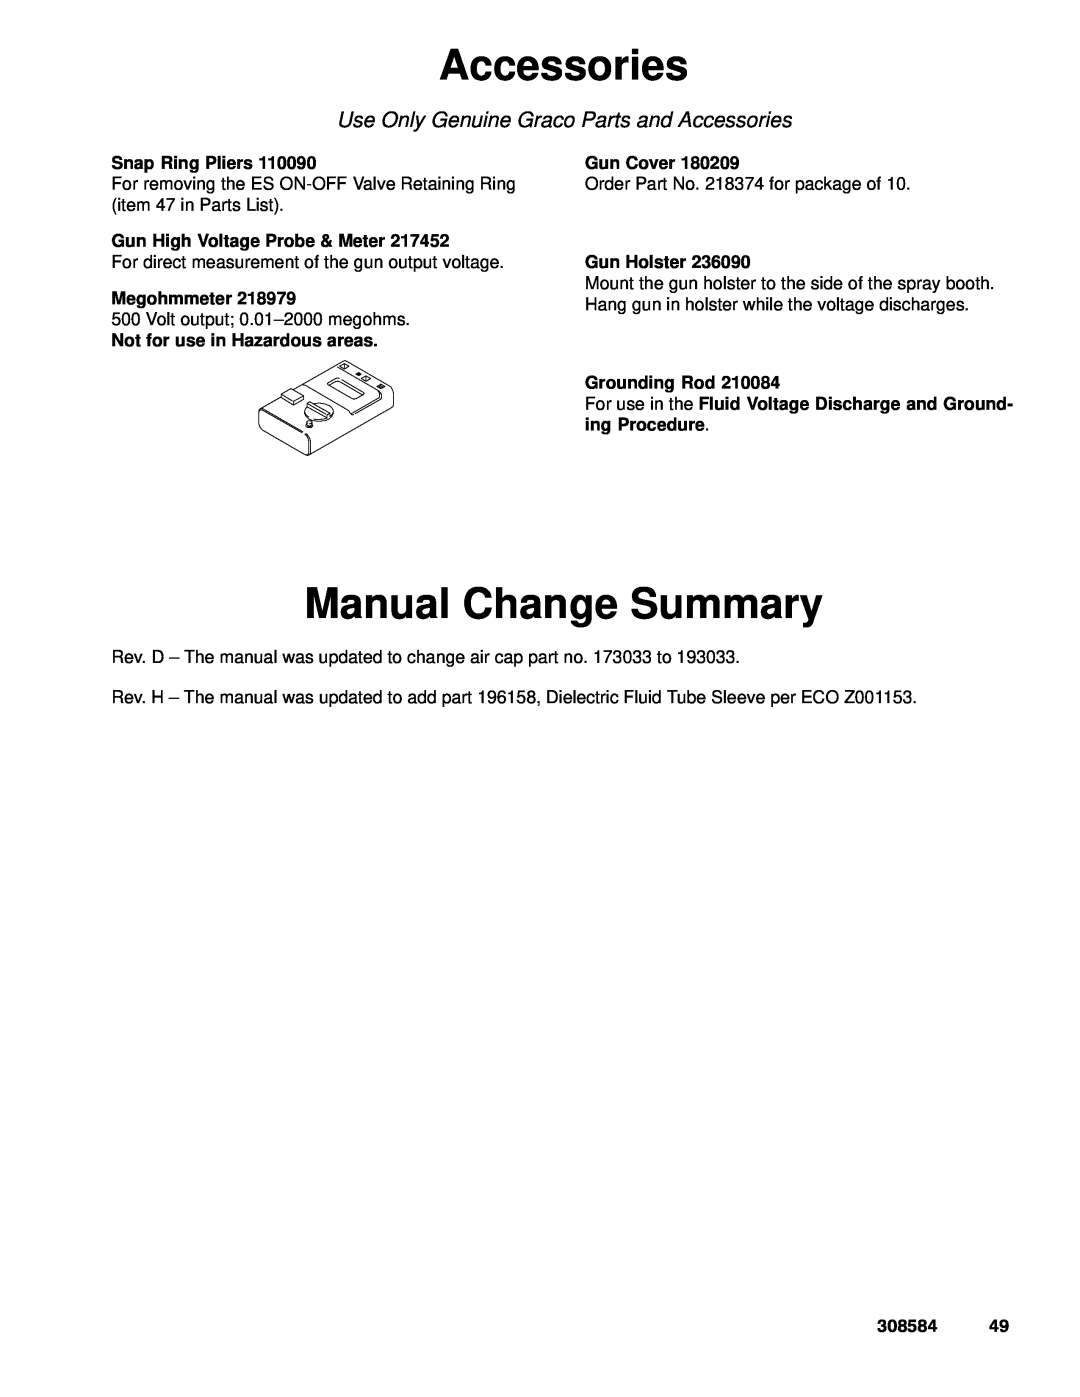 Graco Inc 308584, 3500WB Manual Change Summary, Snap Ring Pliers, Gun High Voltage Probe & Meter, Megohmmeter, Gun Cover 